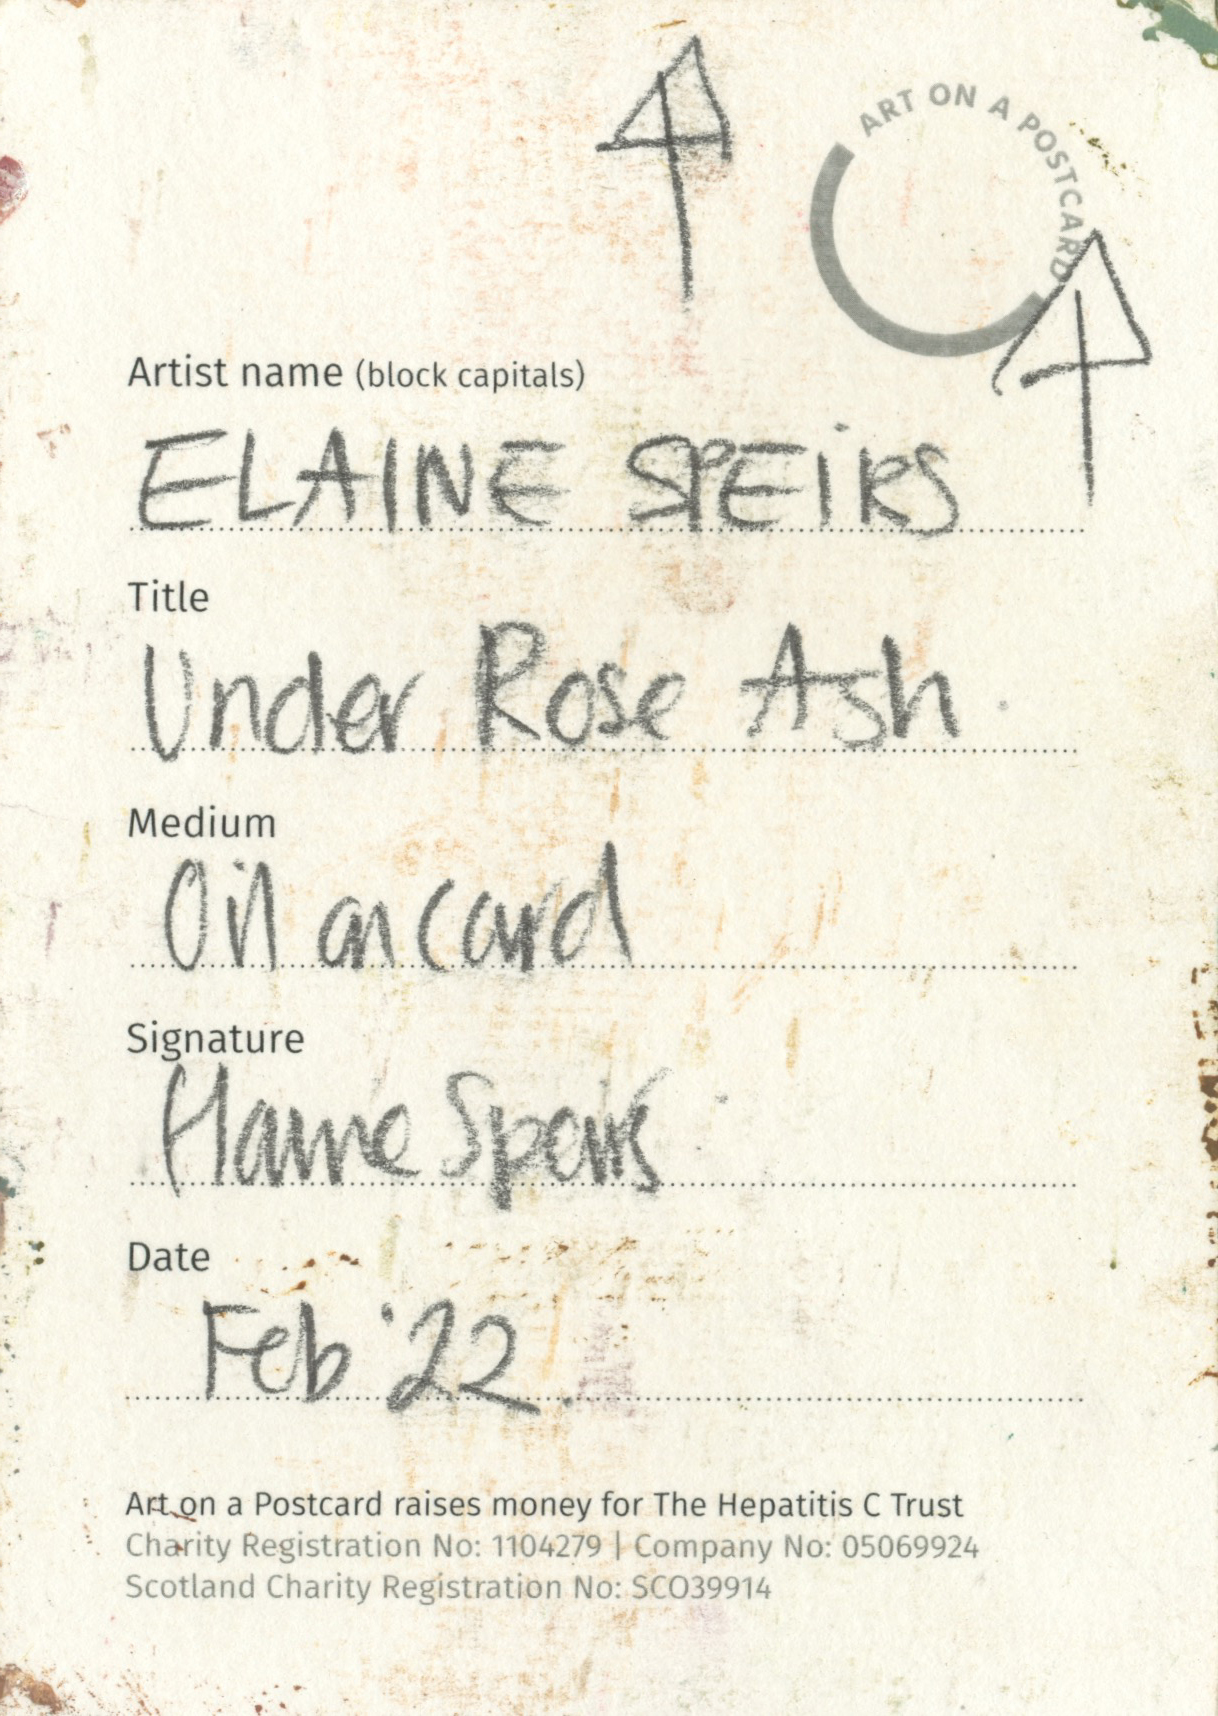 11. Elaine Speirs - Under Rose Ash - BACK